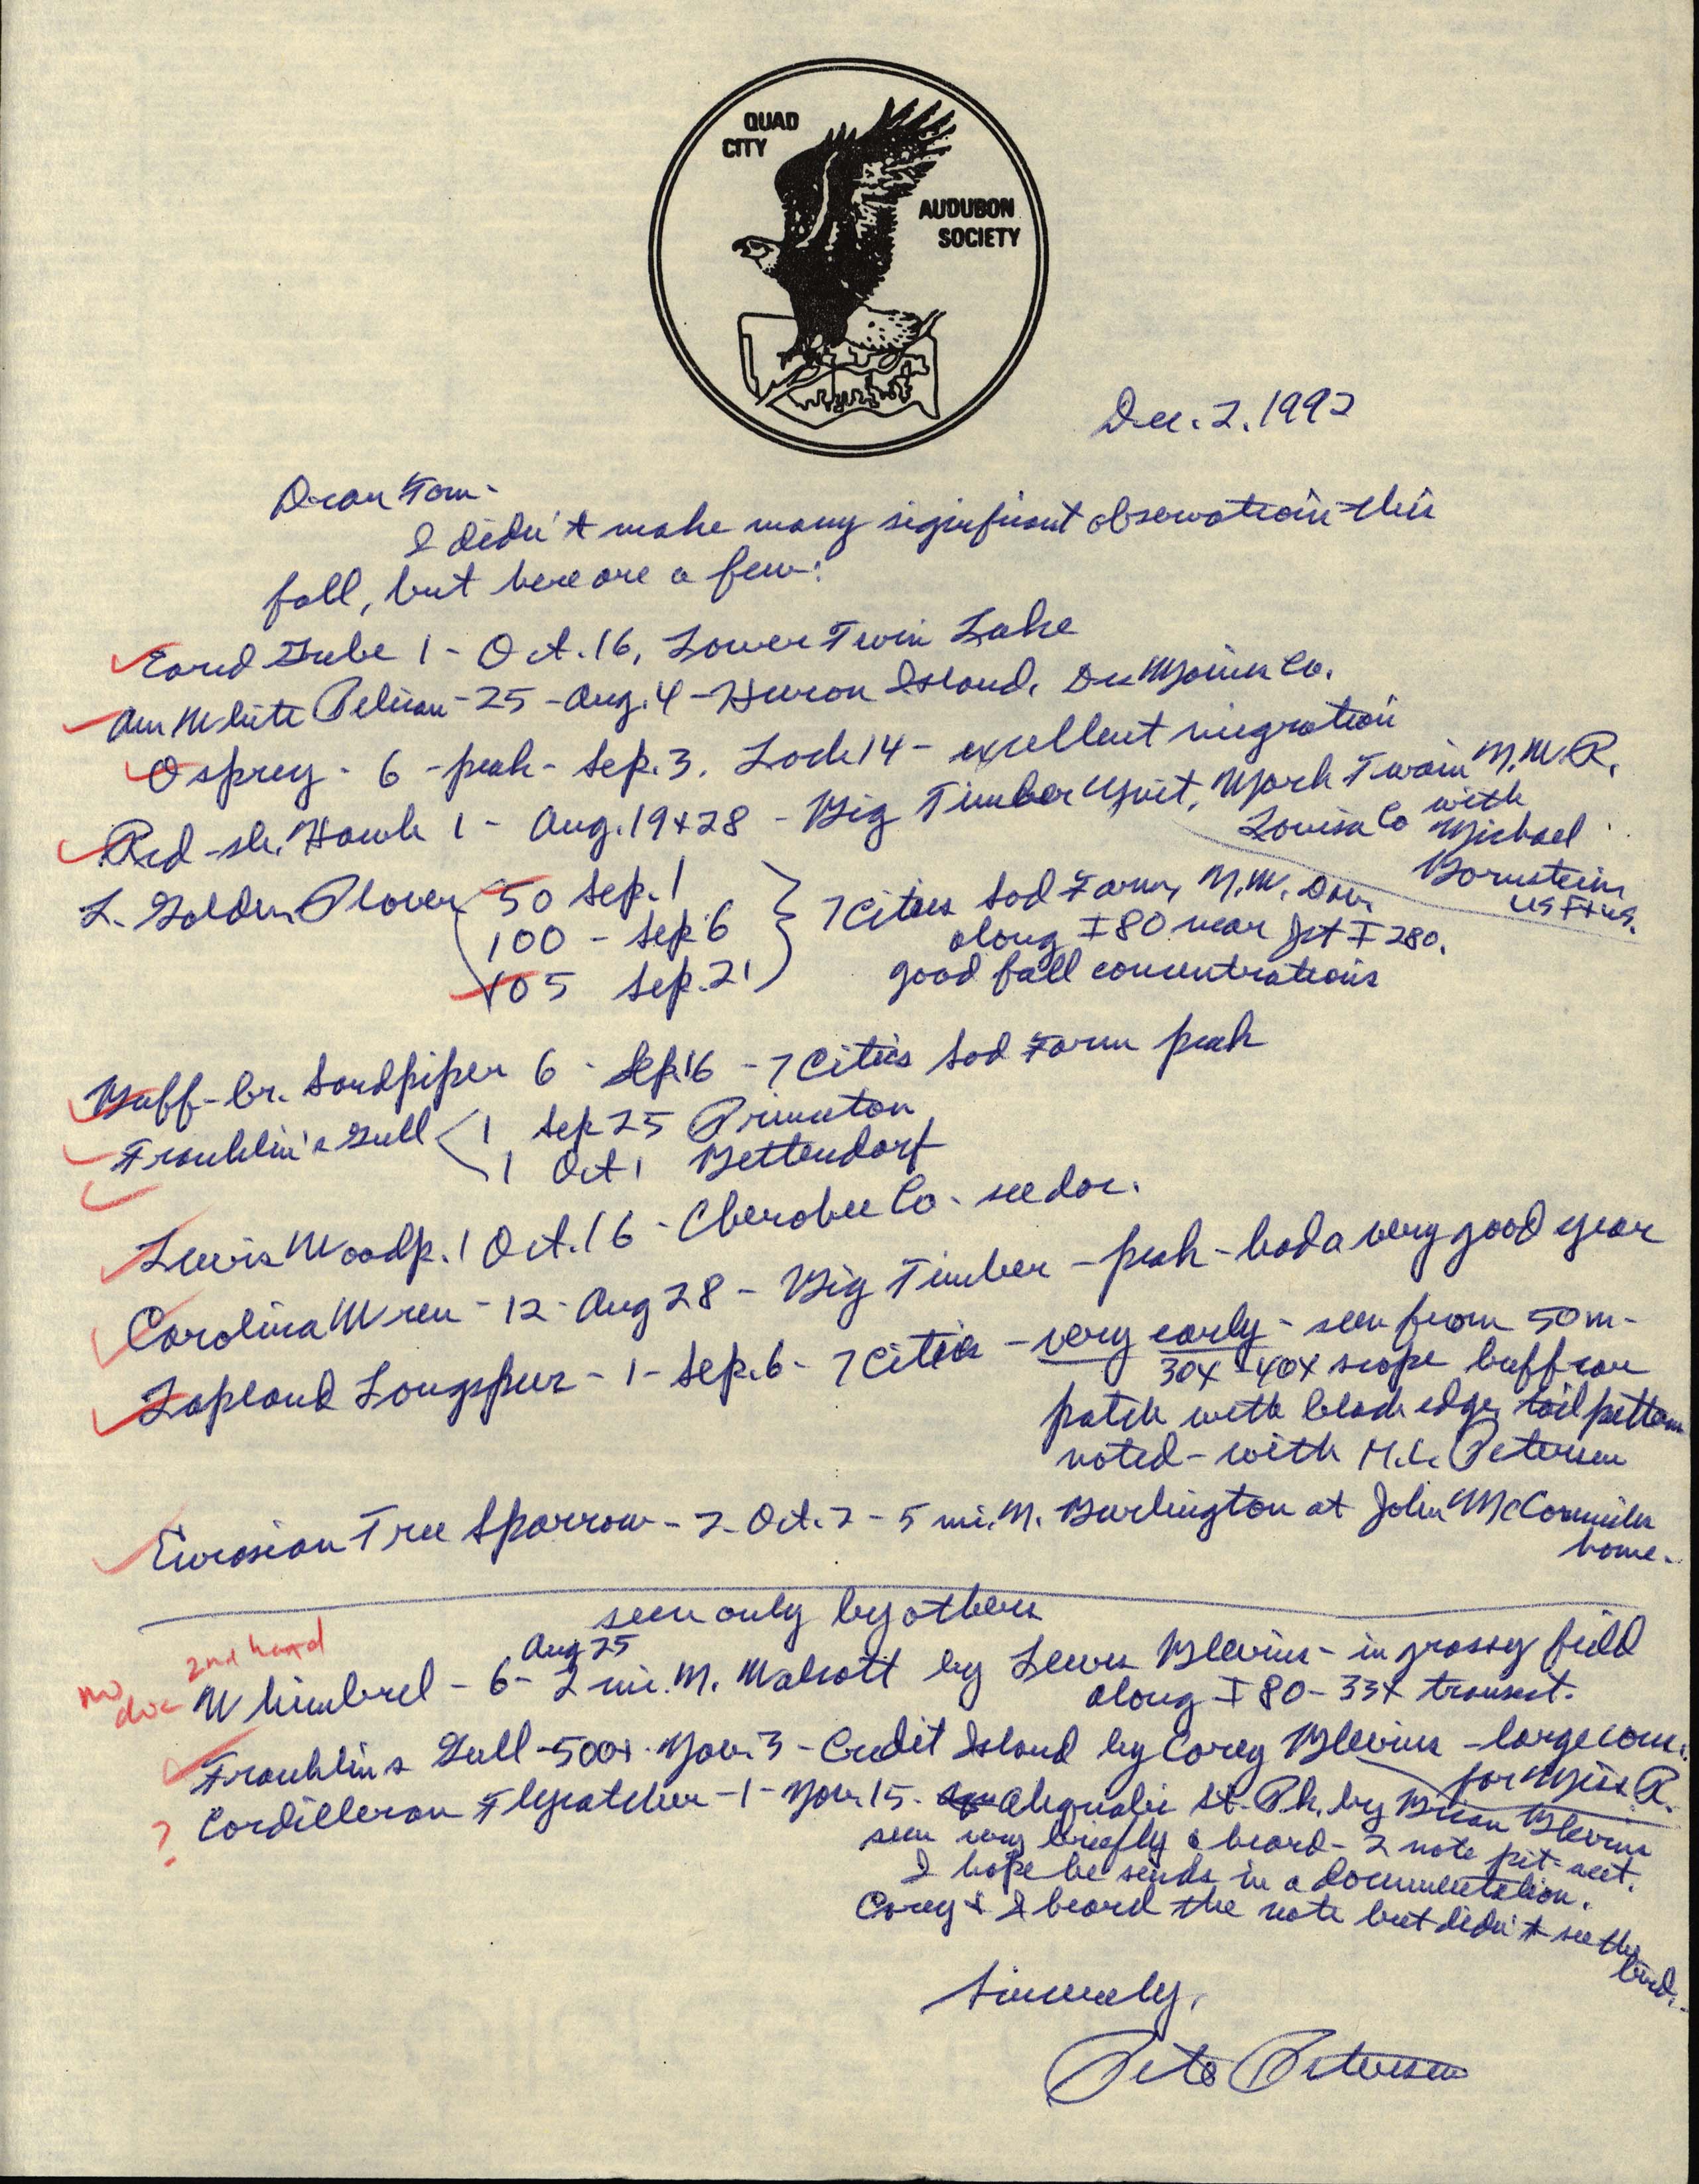 Peter C. Petersen letter to Thomas H. Kent regarding fall bird sightings, December 2, 1992